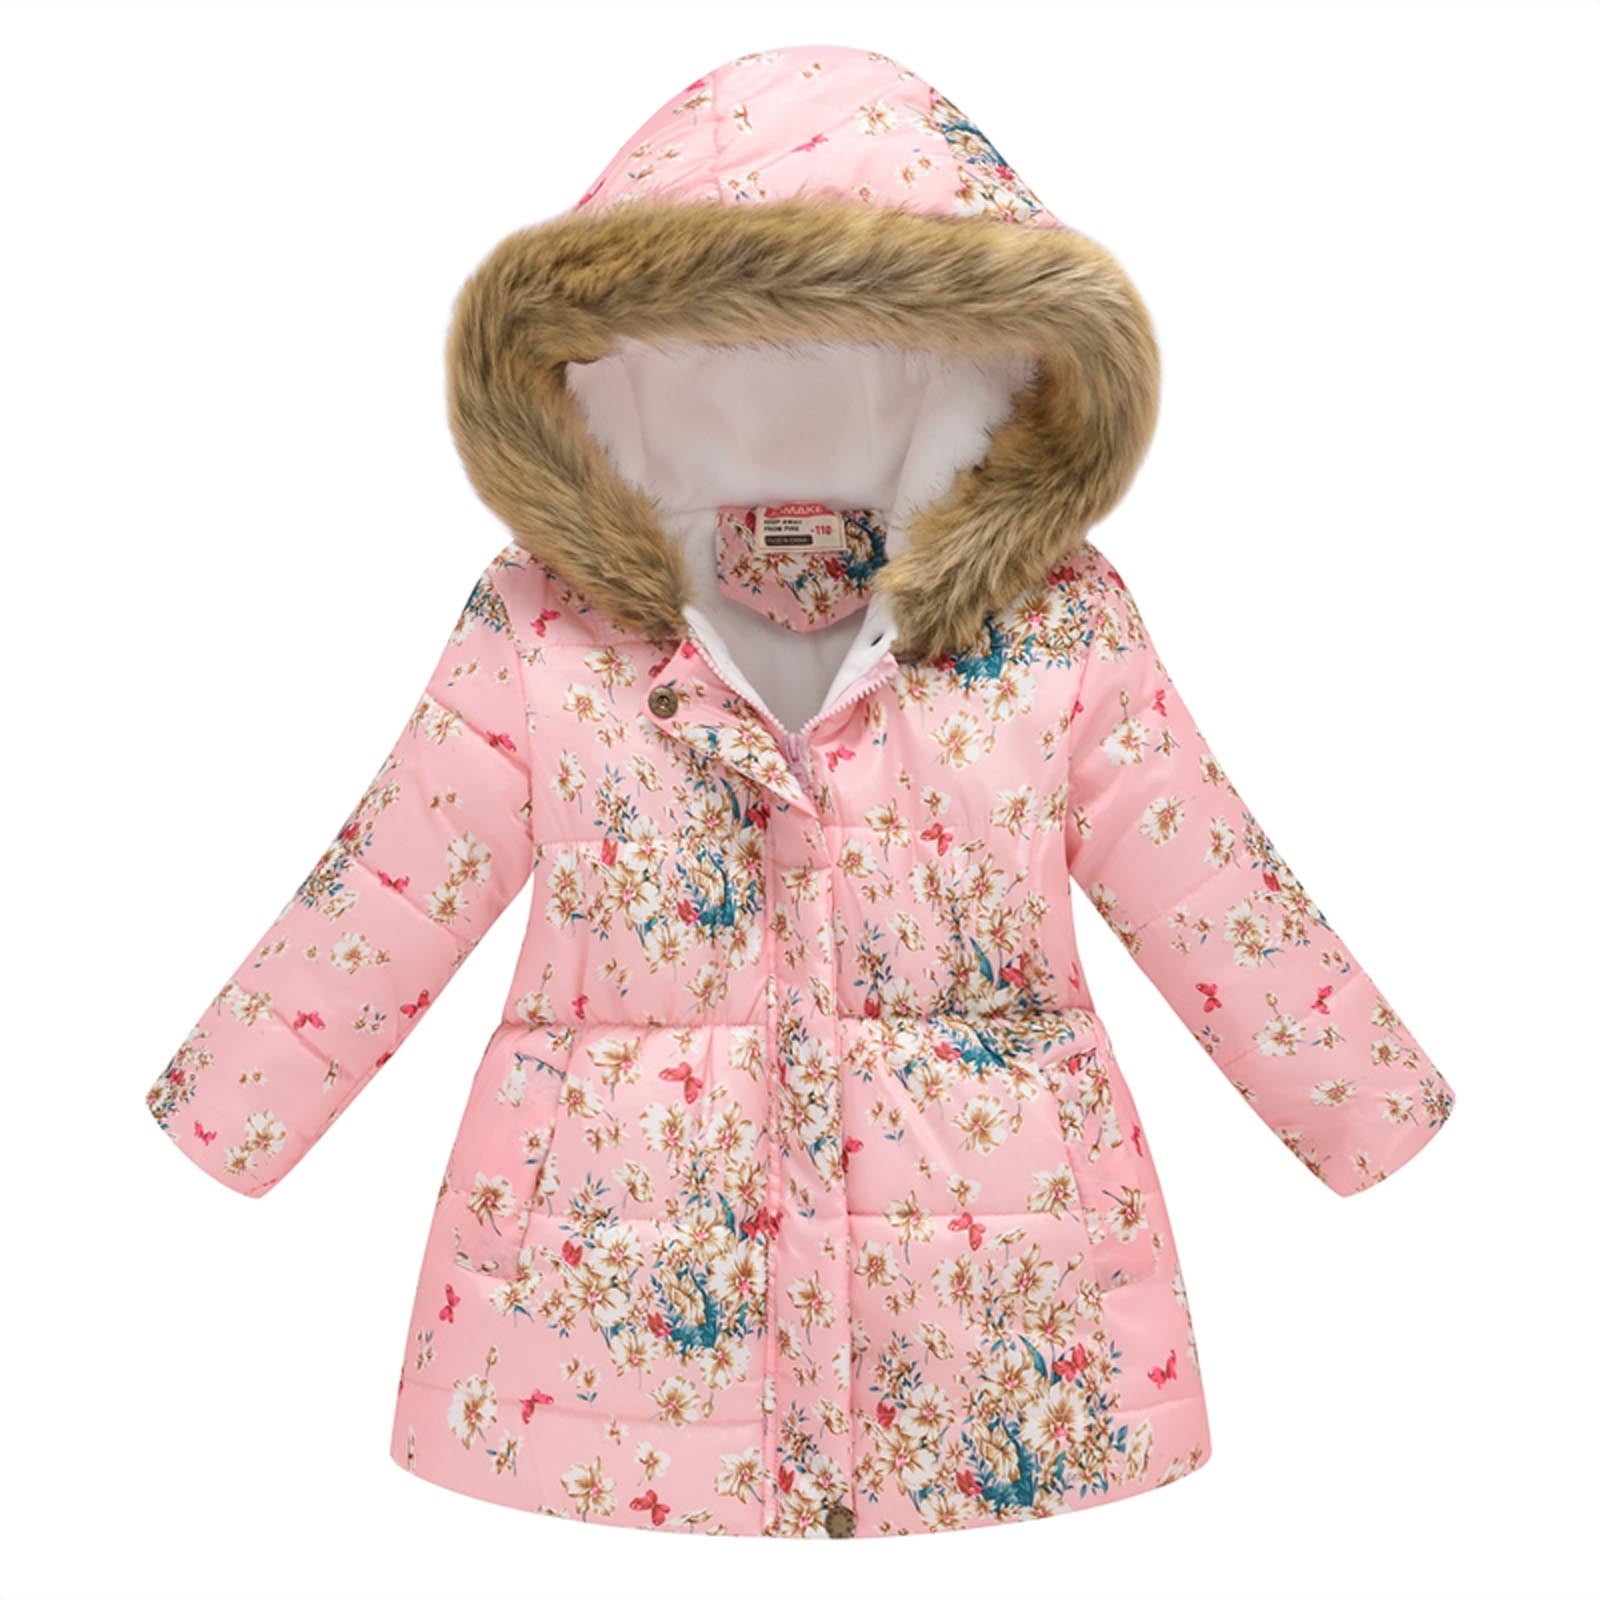 Kids Toddler Baby Girls Winter Warm Coat Floral Hoodie Padded Jacket Outerwear 